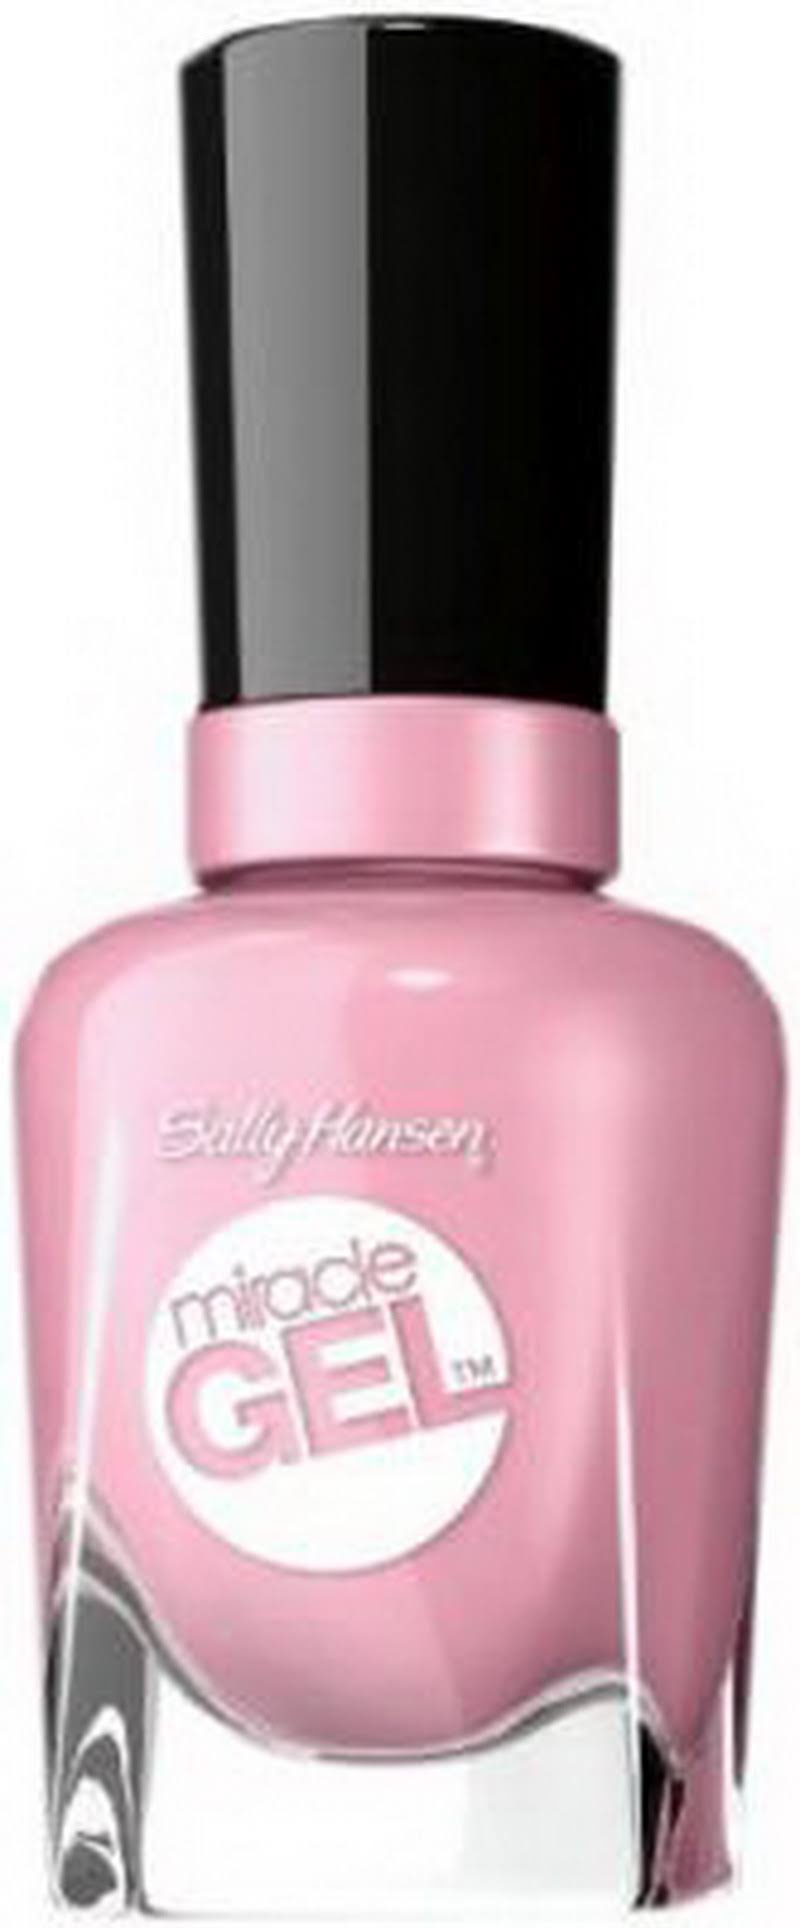 Sally Hansen Miracle Gel Step - 160 Pinky Promise, 14.7ml